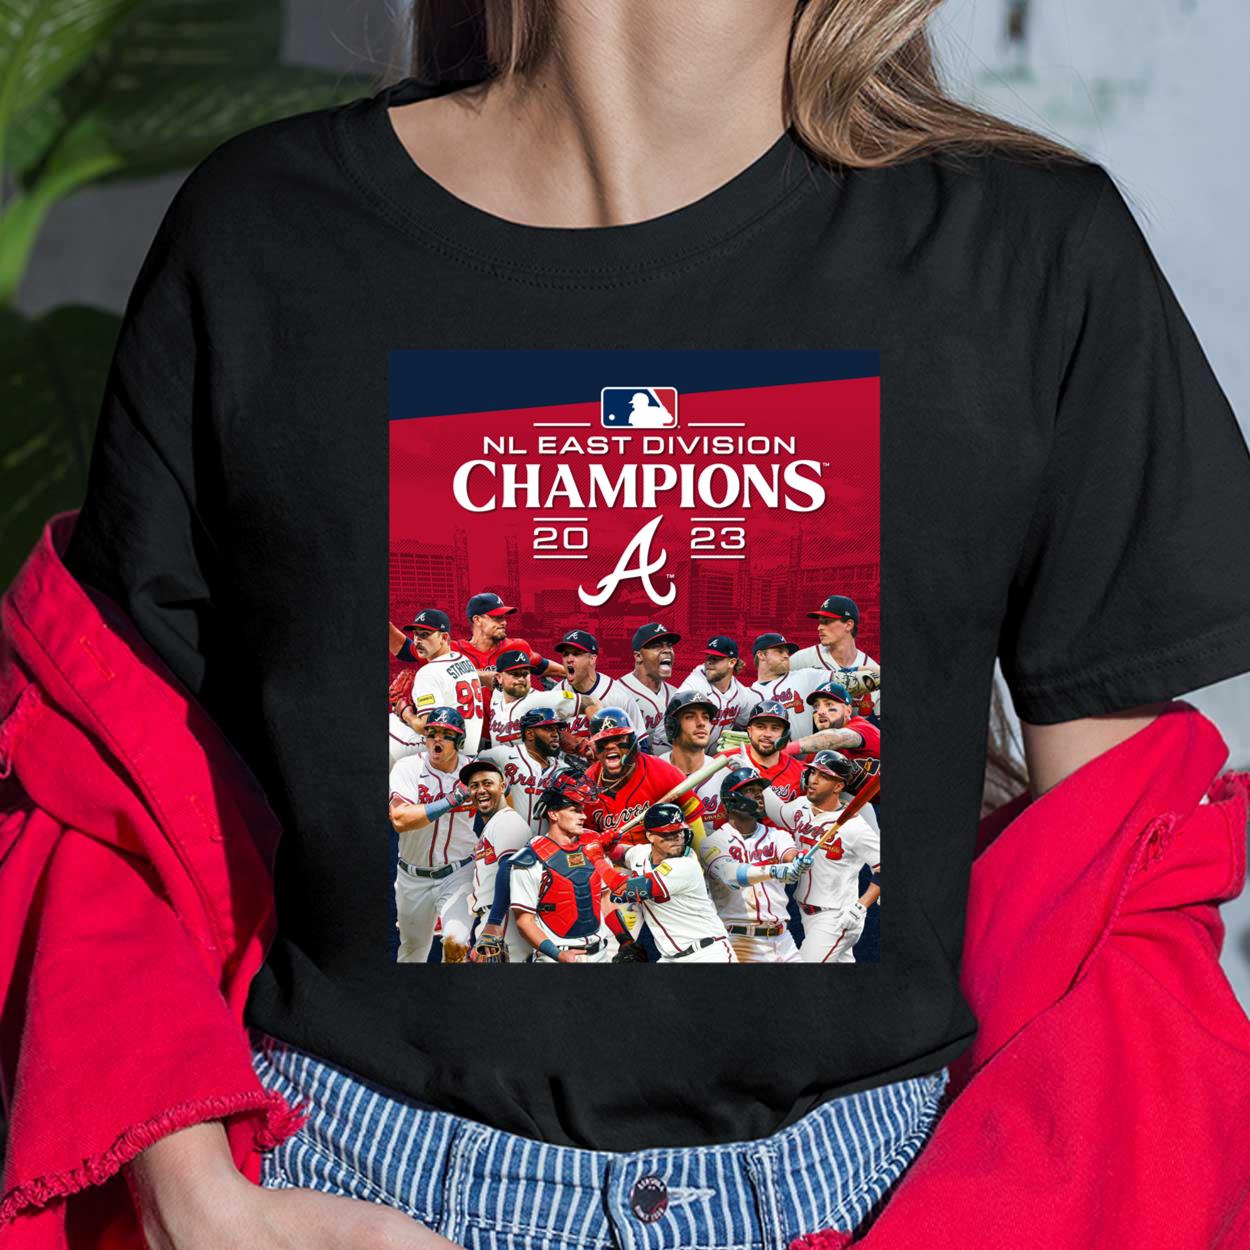 The Atlanta Braves Are 2023 Nl East Champions Shirt